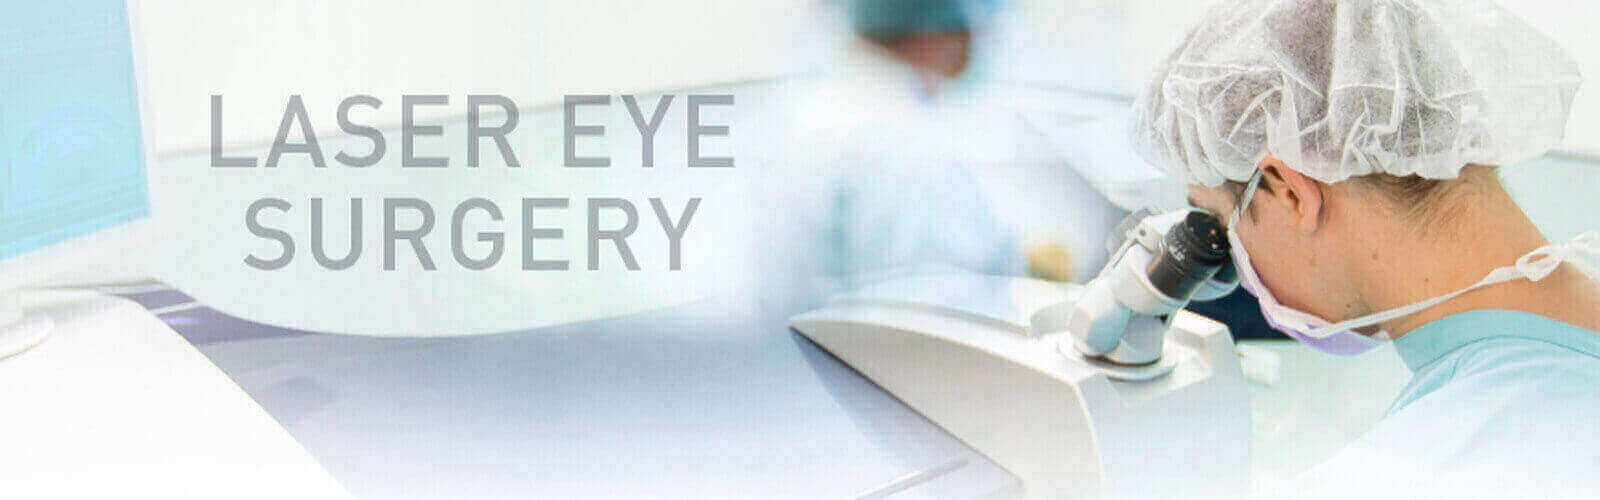 Laser Eye Surgery in India